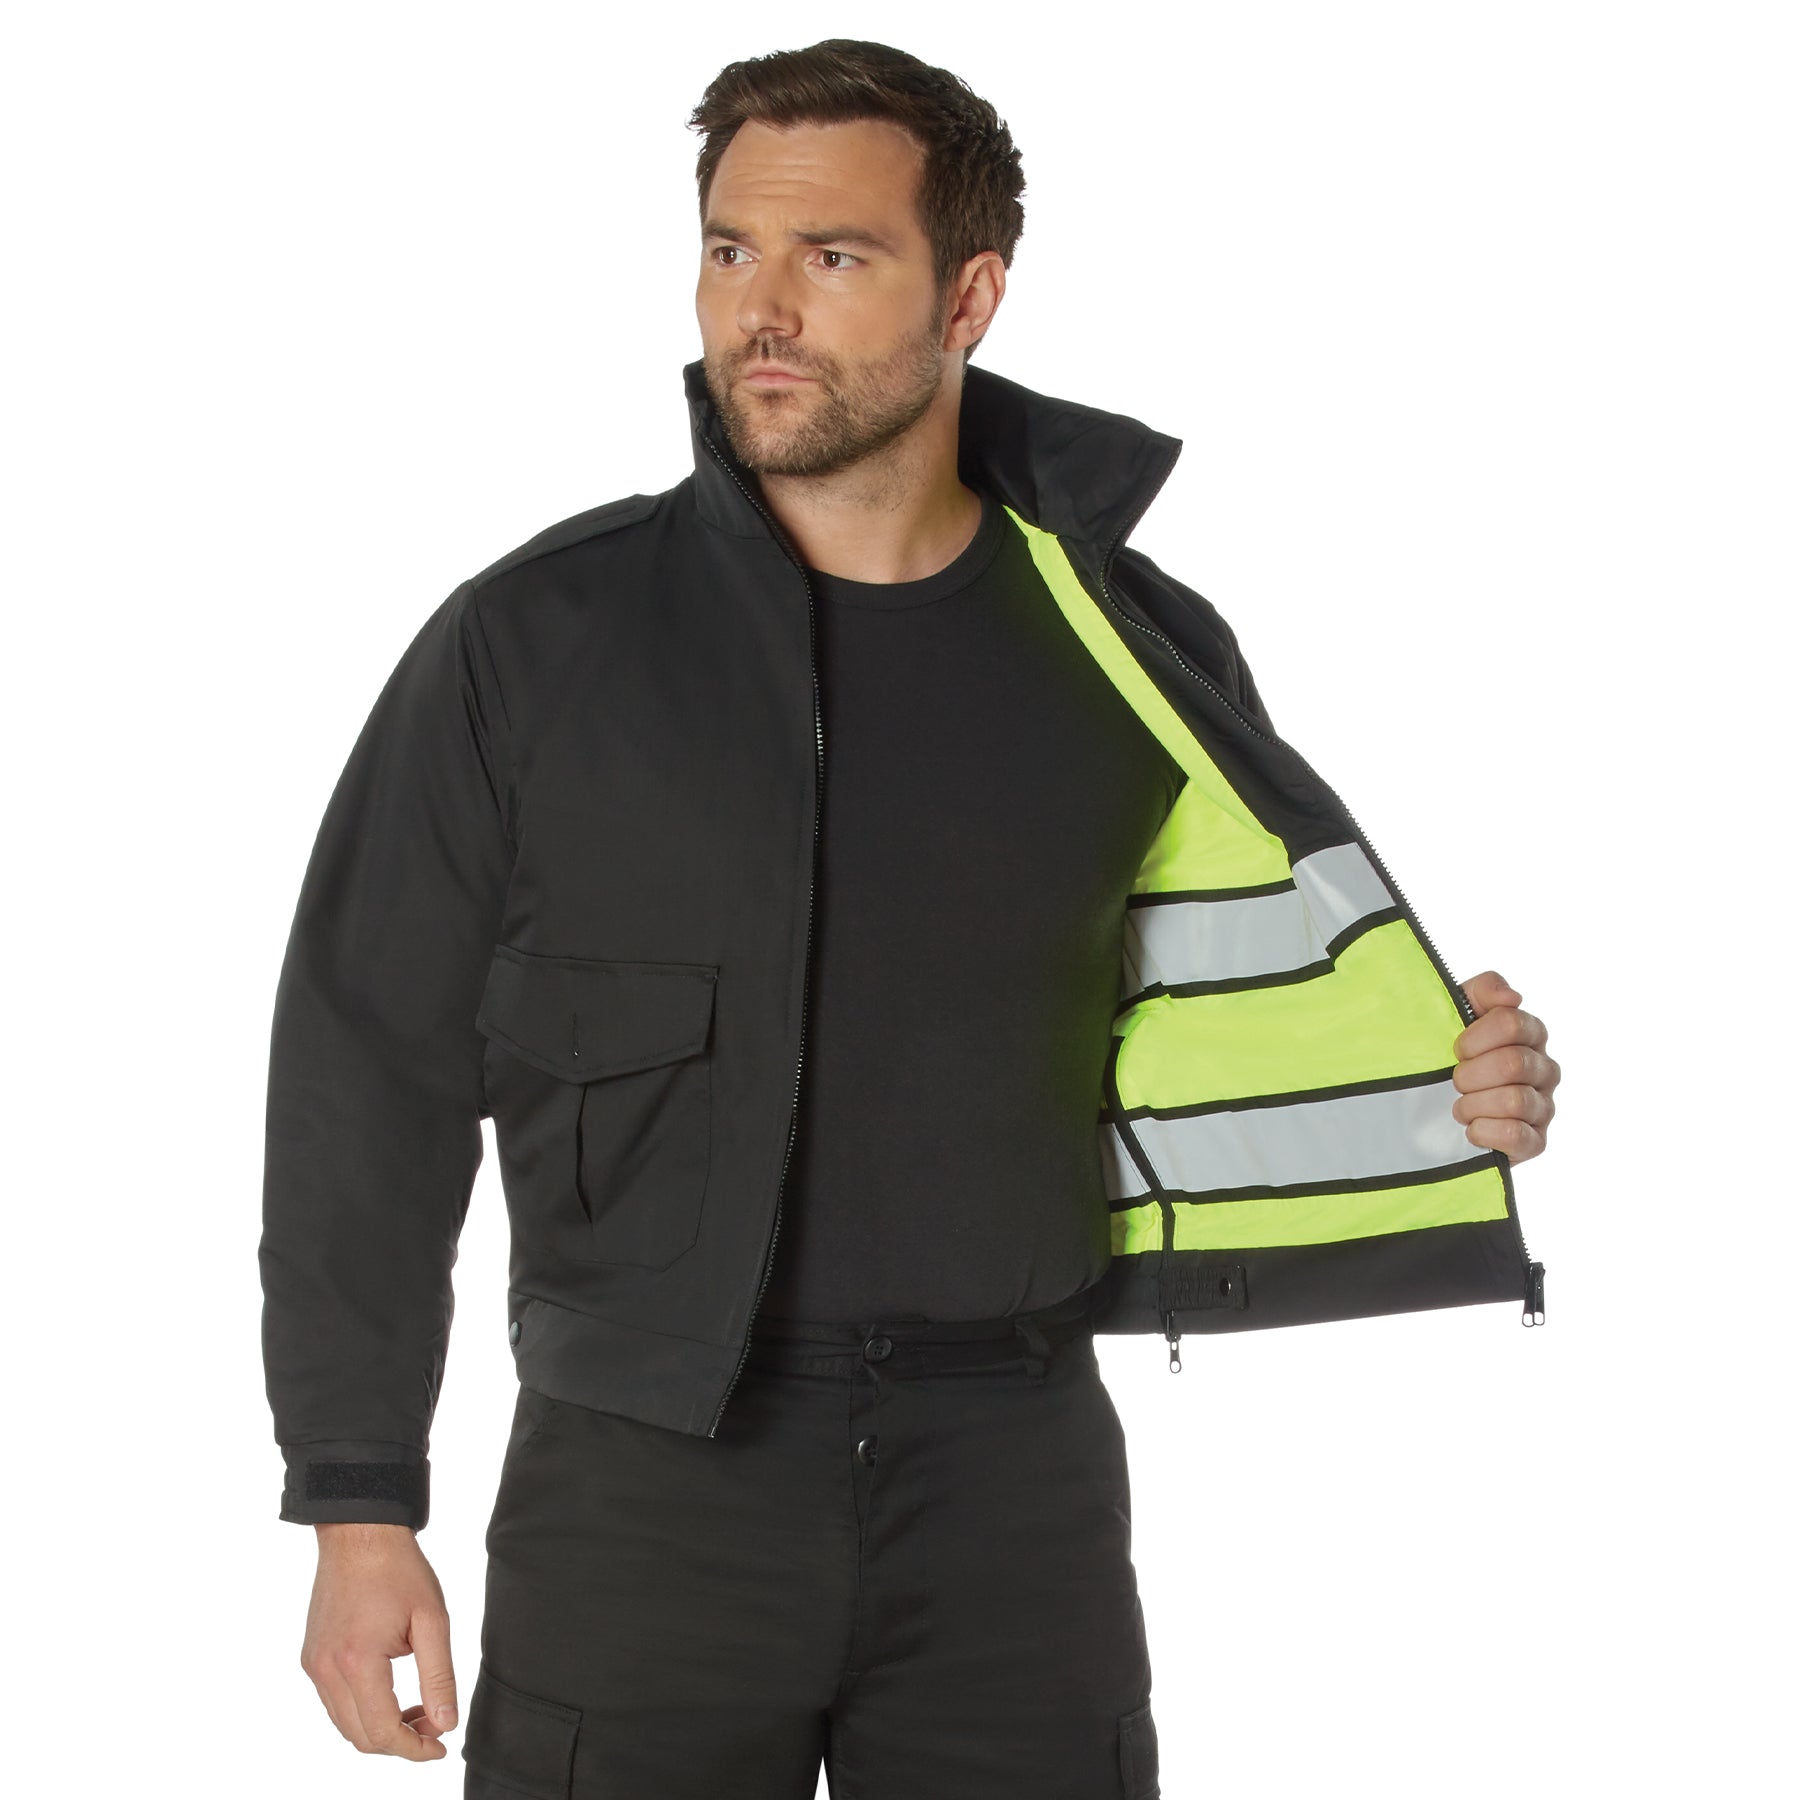 [Public Safety] Nylon Security Reversible HI-Visibility Forced Entry Uniform Jackets